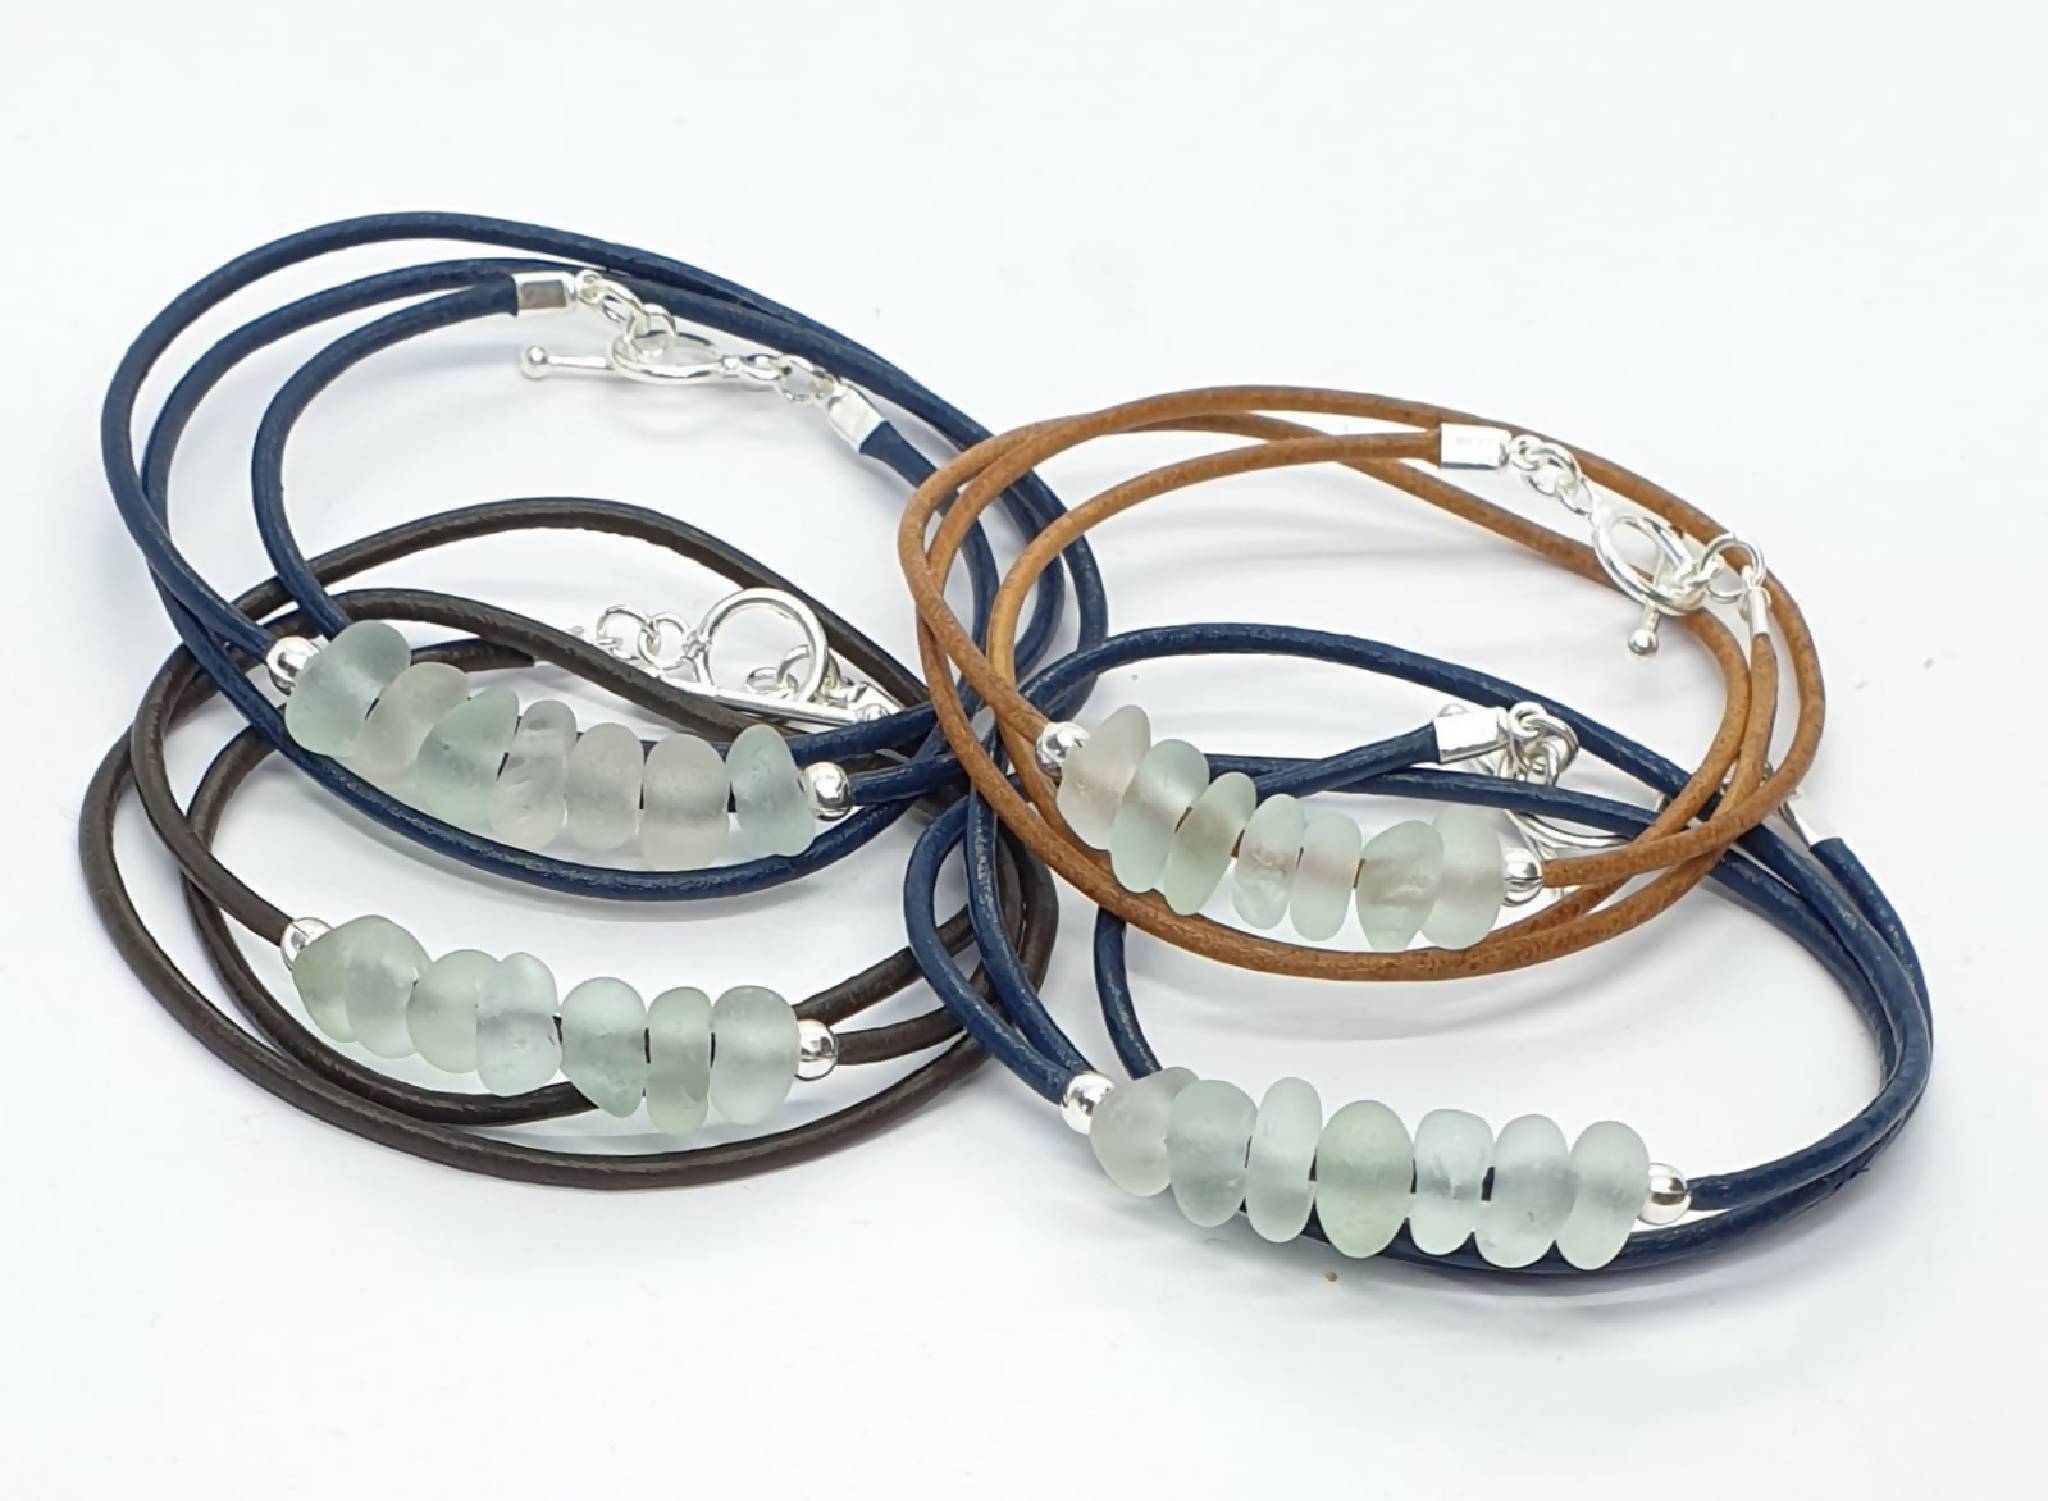 Triple-wrap leather and sea glass bracelet